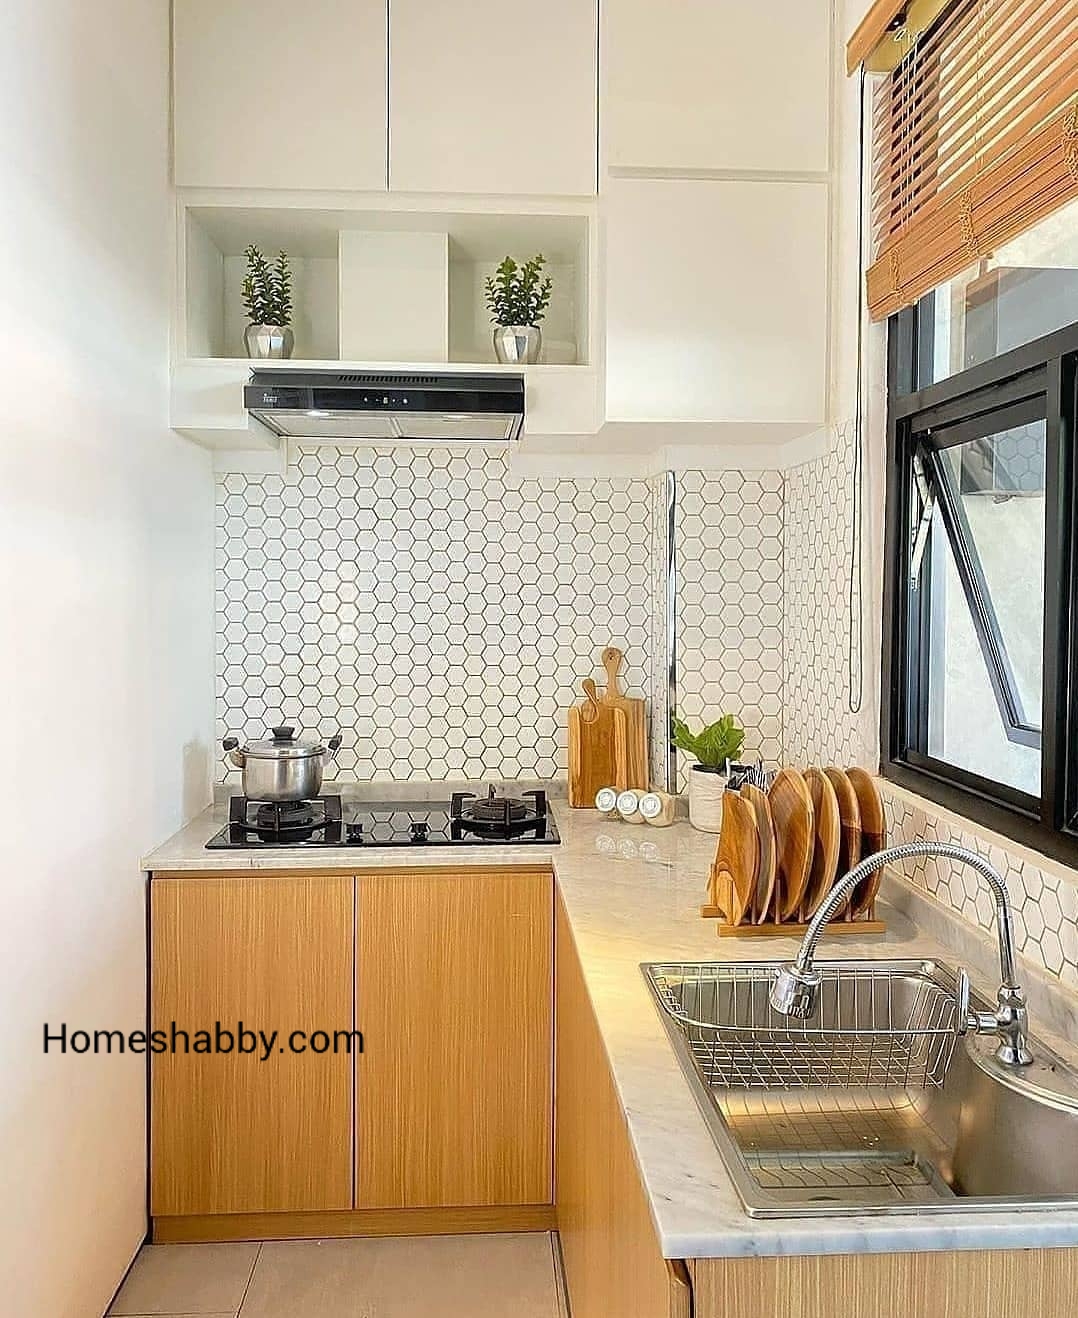 6 Desain Dapur Minimalis Ukuran 1 X 1 M Terbaru Homeshabbycom Design Home Plans